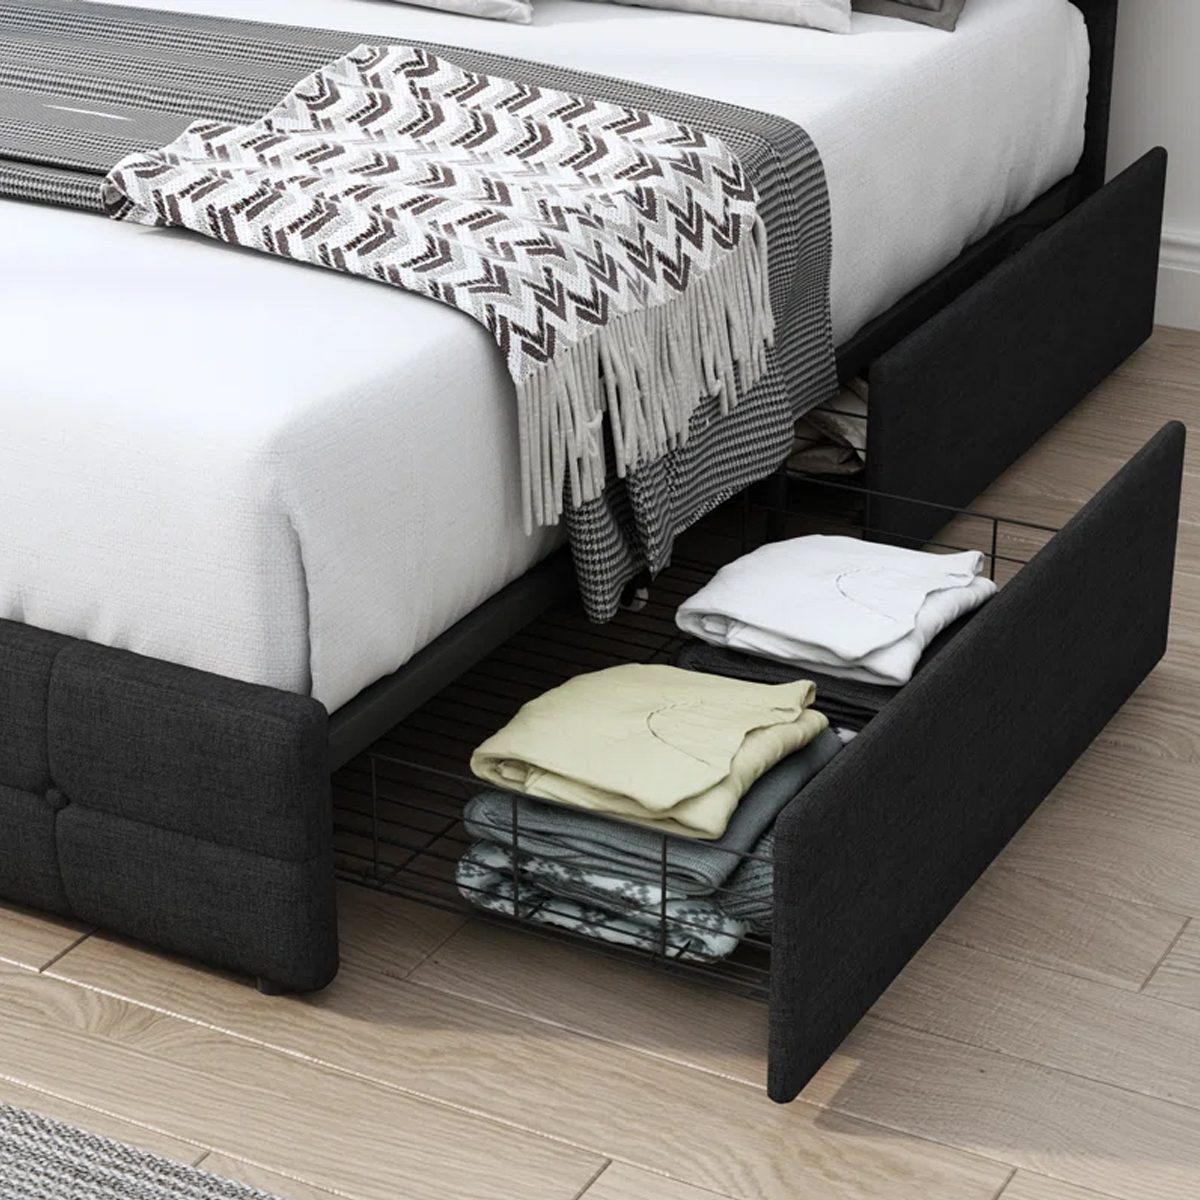 Tufted Upholstered Storage Platform Bed With Adjustable Headboard Ecomm Wayfair.com